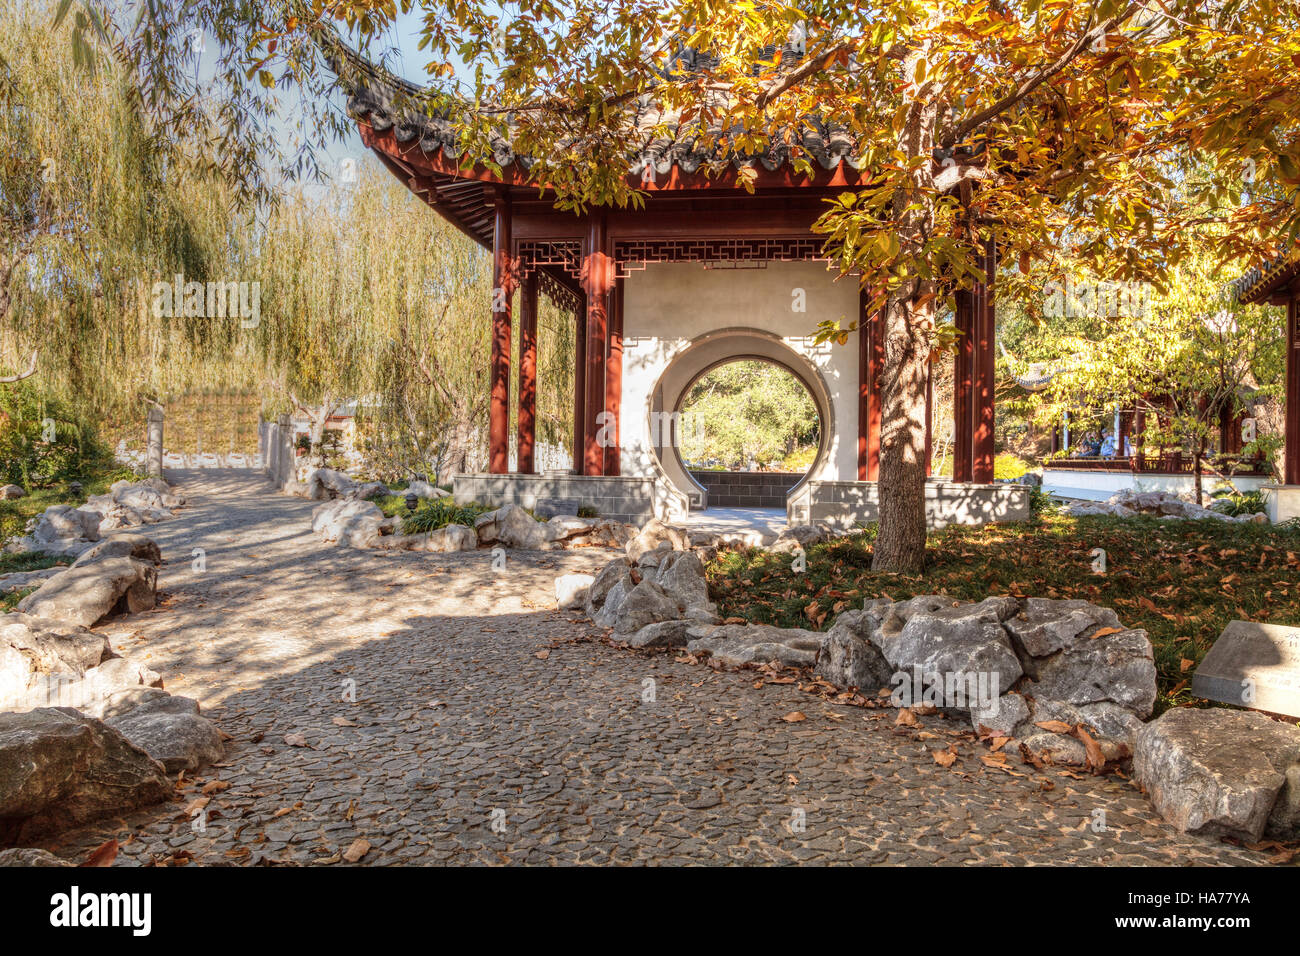 Los Angeles, CA, USA – November 25, 2016: Long hallway path in the Chinese garden at the Huntington Botanical Gardens in Los Ang Stock Photo